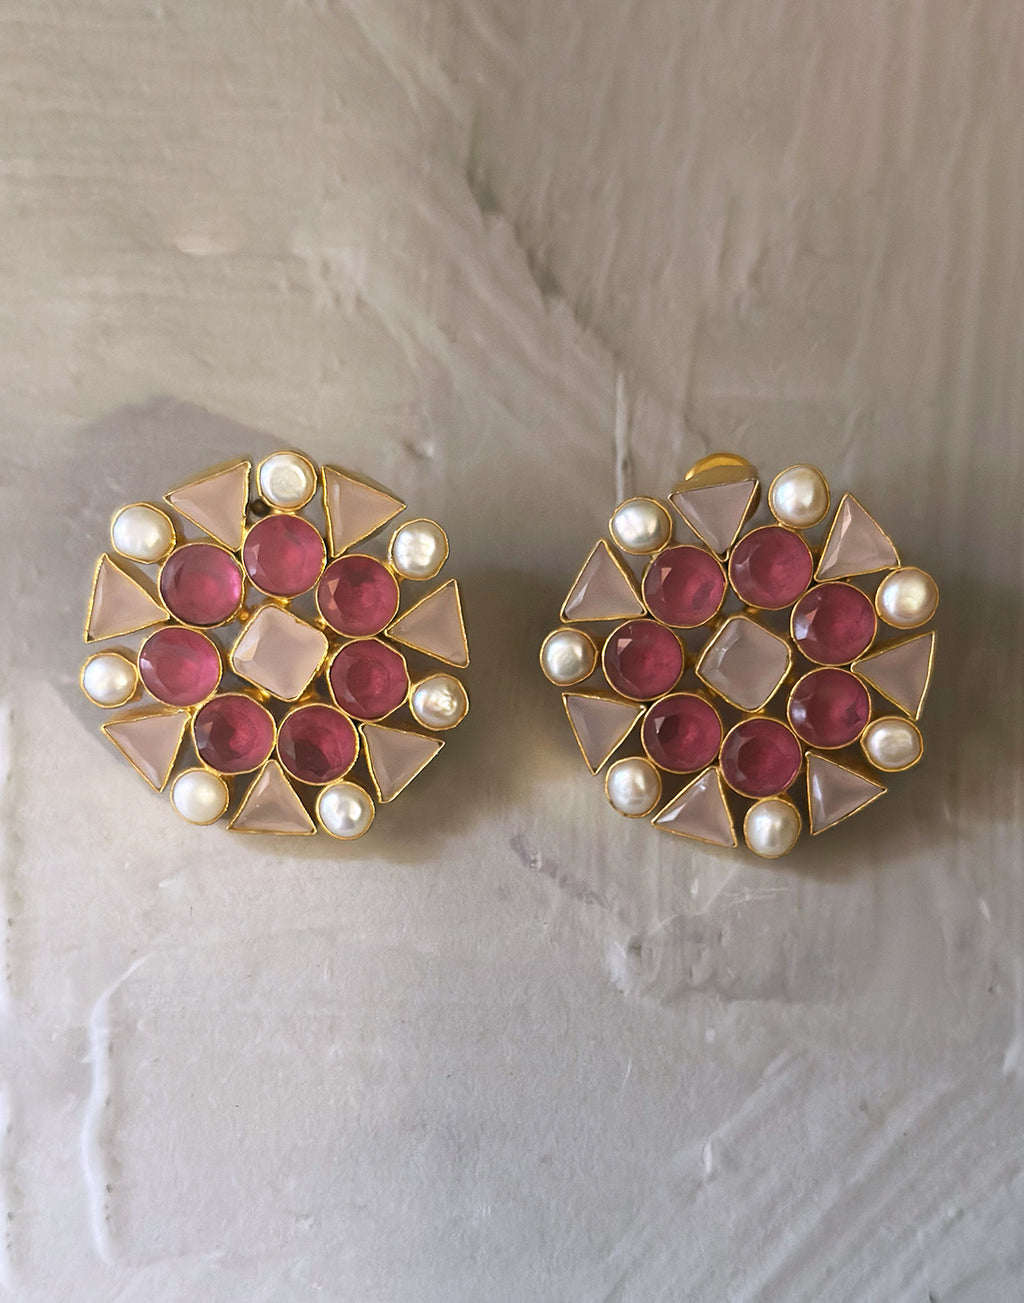 Pink Pinwheel Earrings - Statement Earrings - Gold-Plated & Hypoallergenic Jewellery - Made in India - Dubai Jewellery - Dori